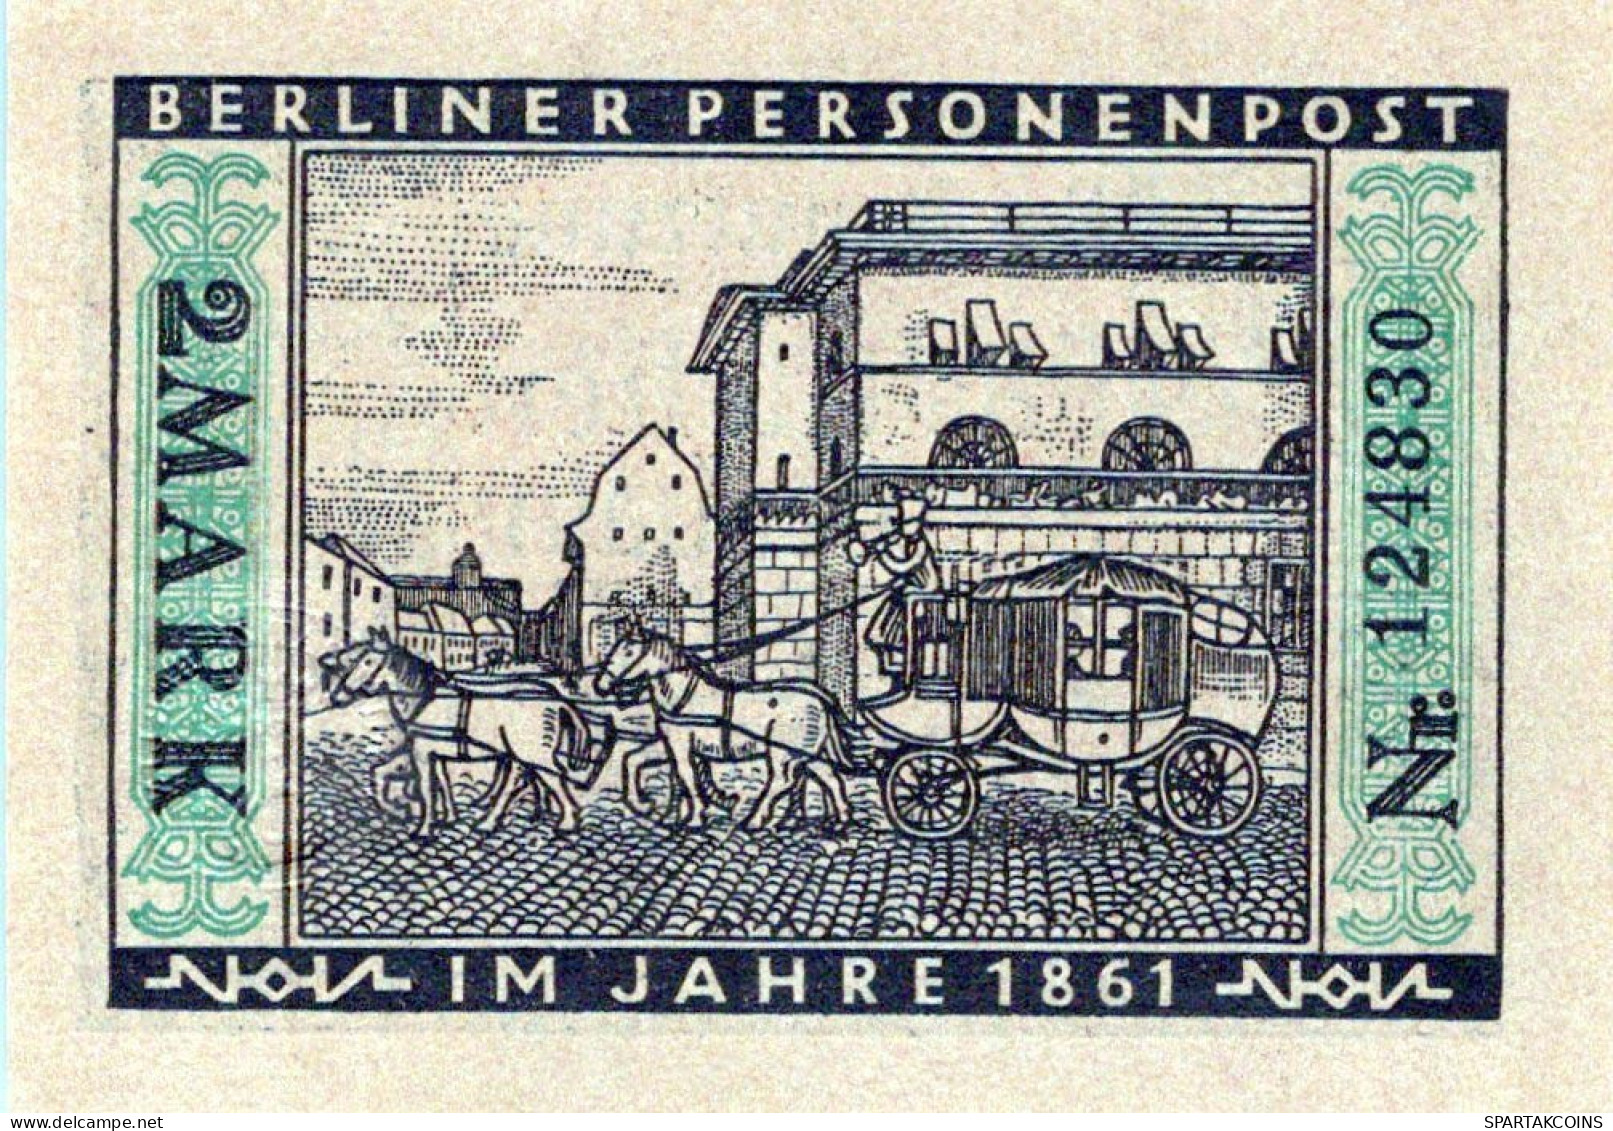 2 MARK 1922 Stadt BERLIN UNC DEUTSCHLAND Notgeld Banknote #PA199 - [11] Local Banknote Issues